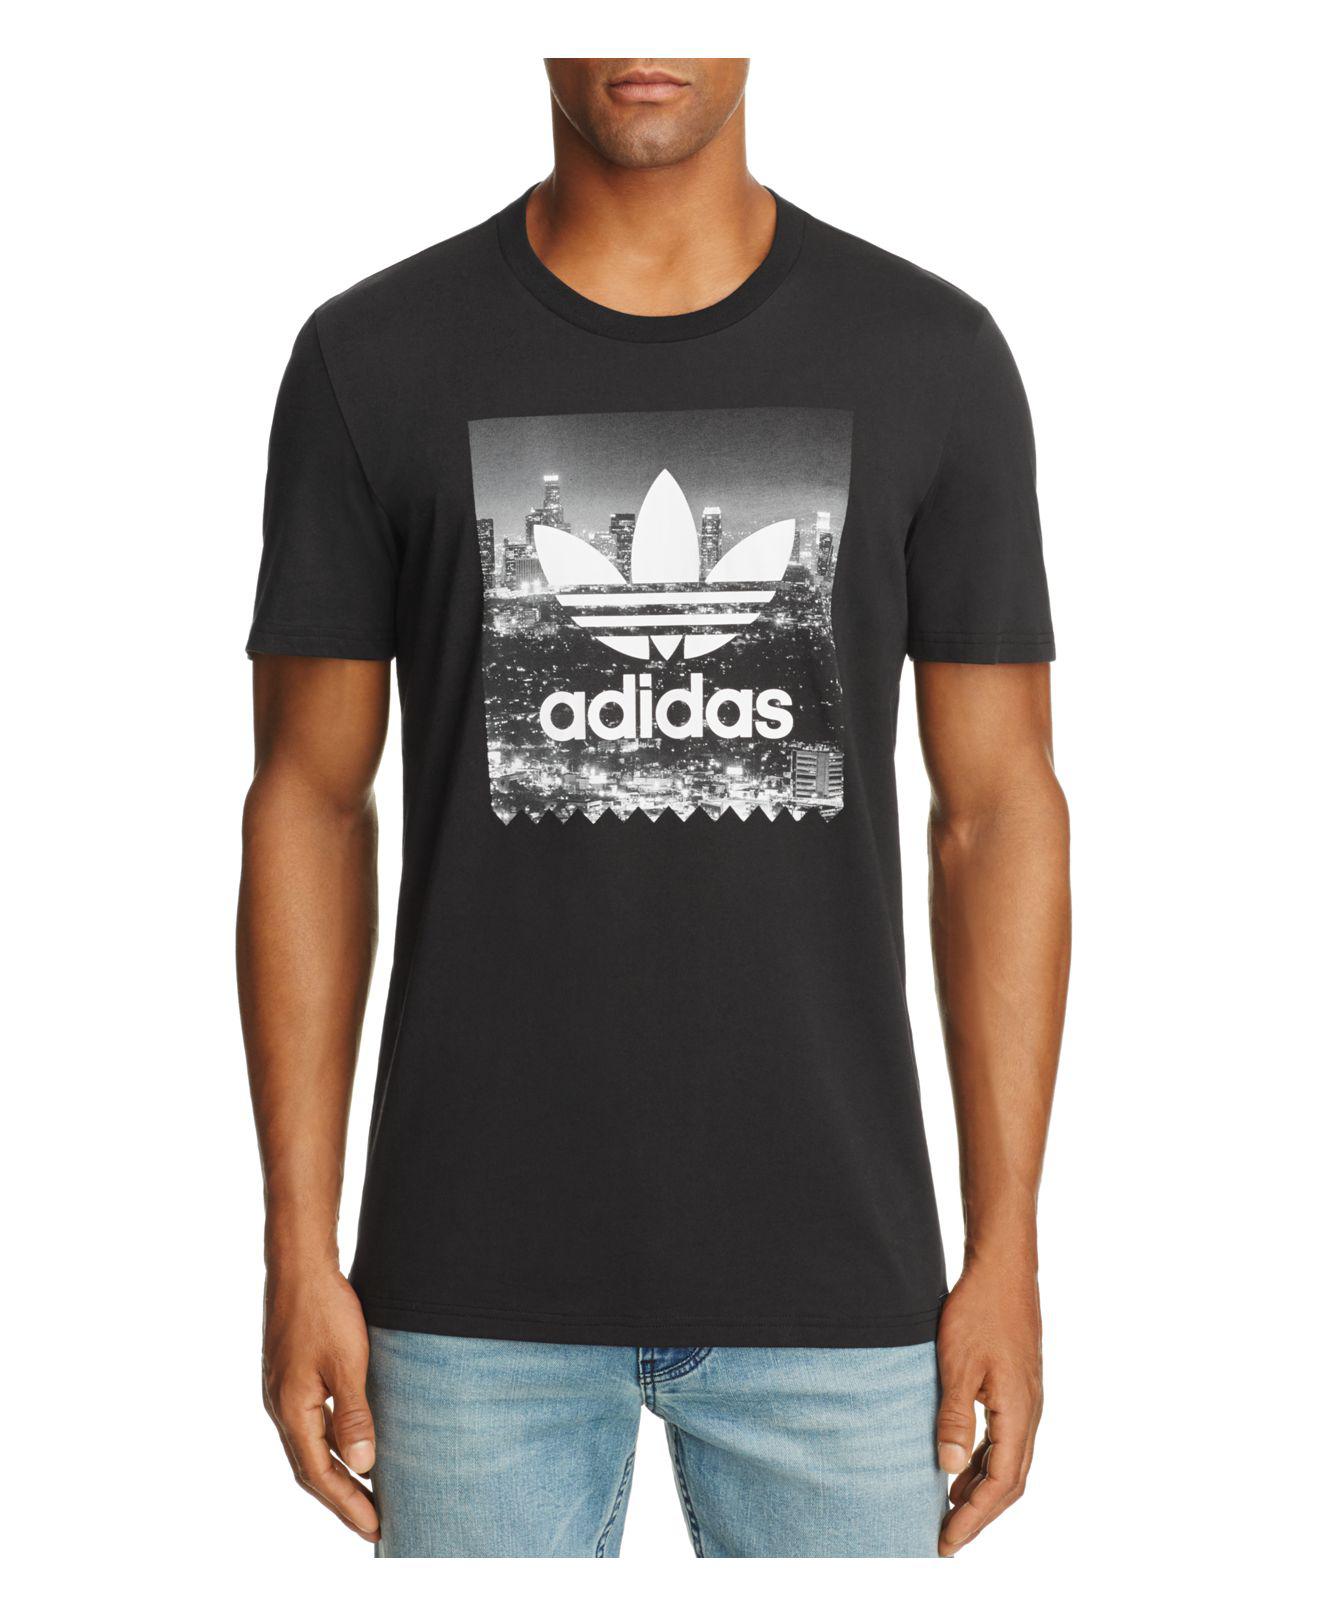 adidas new york shirt